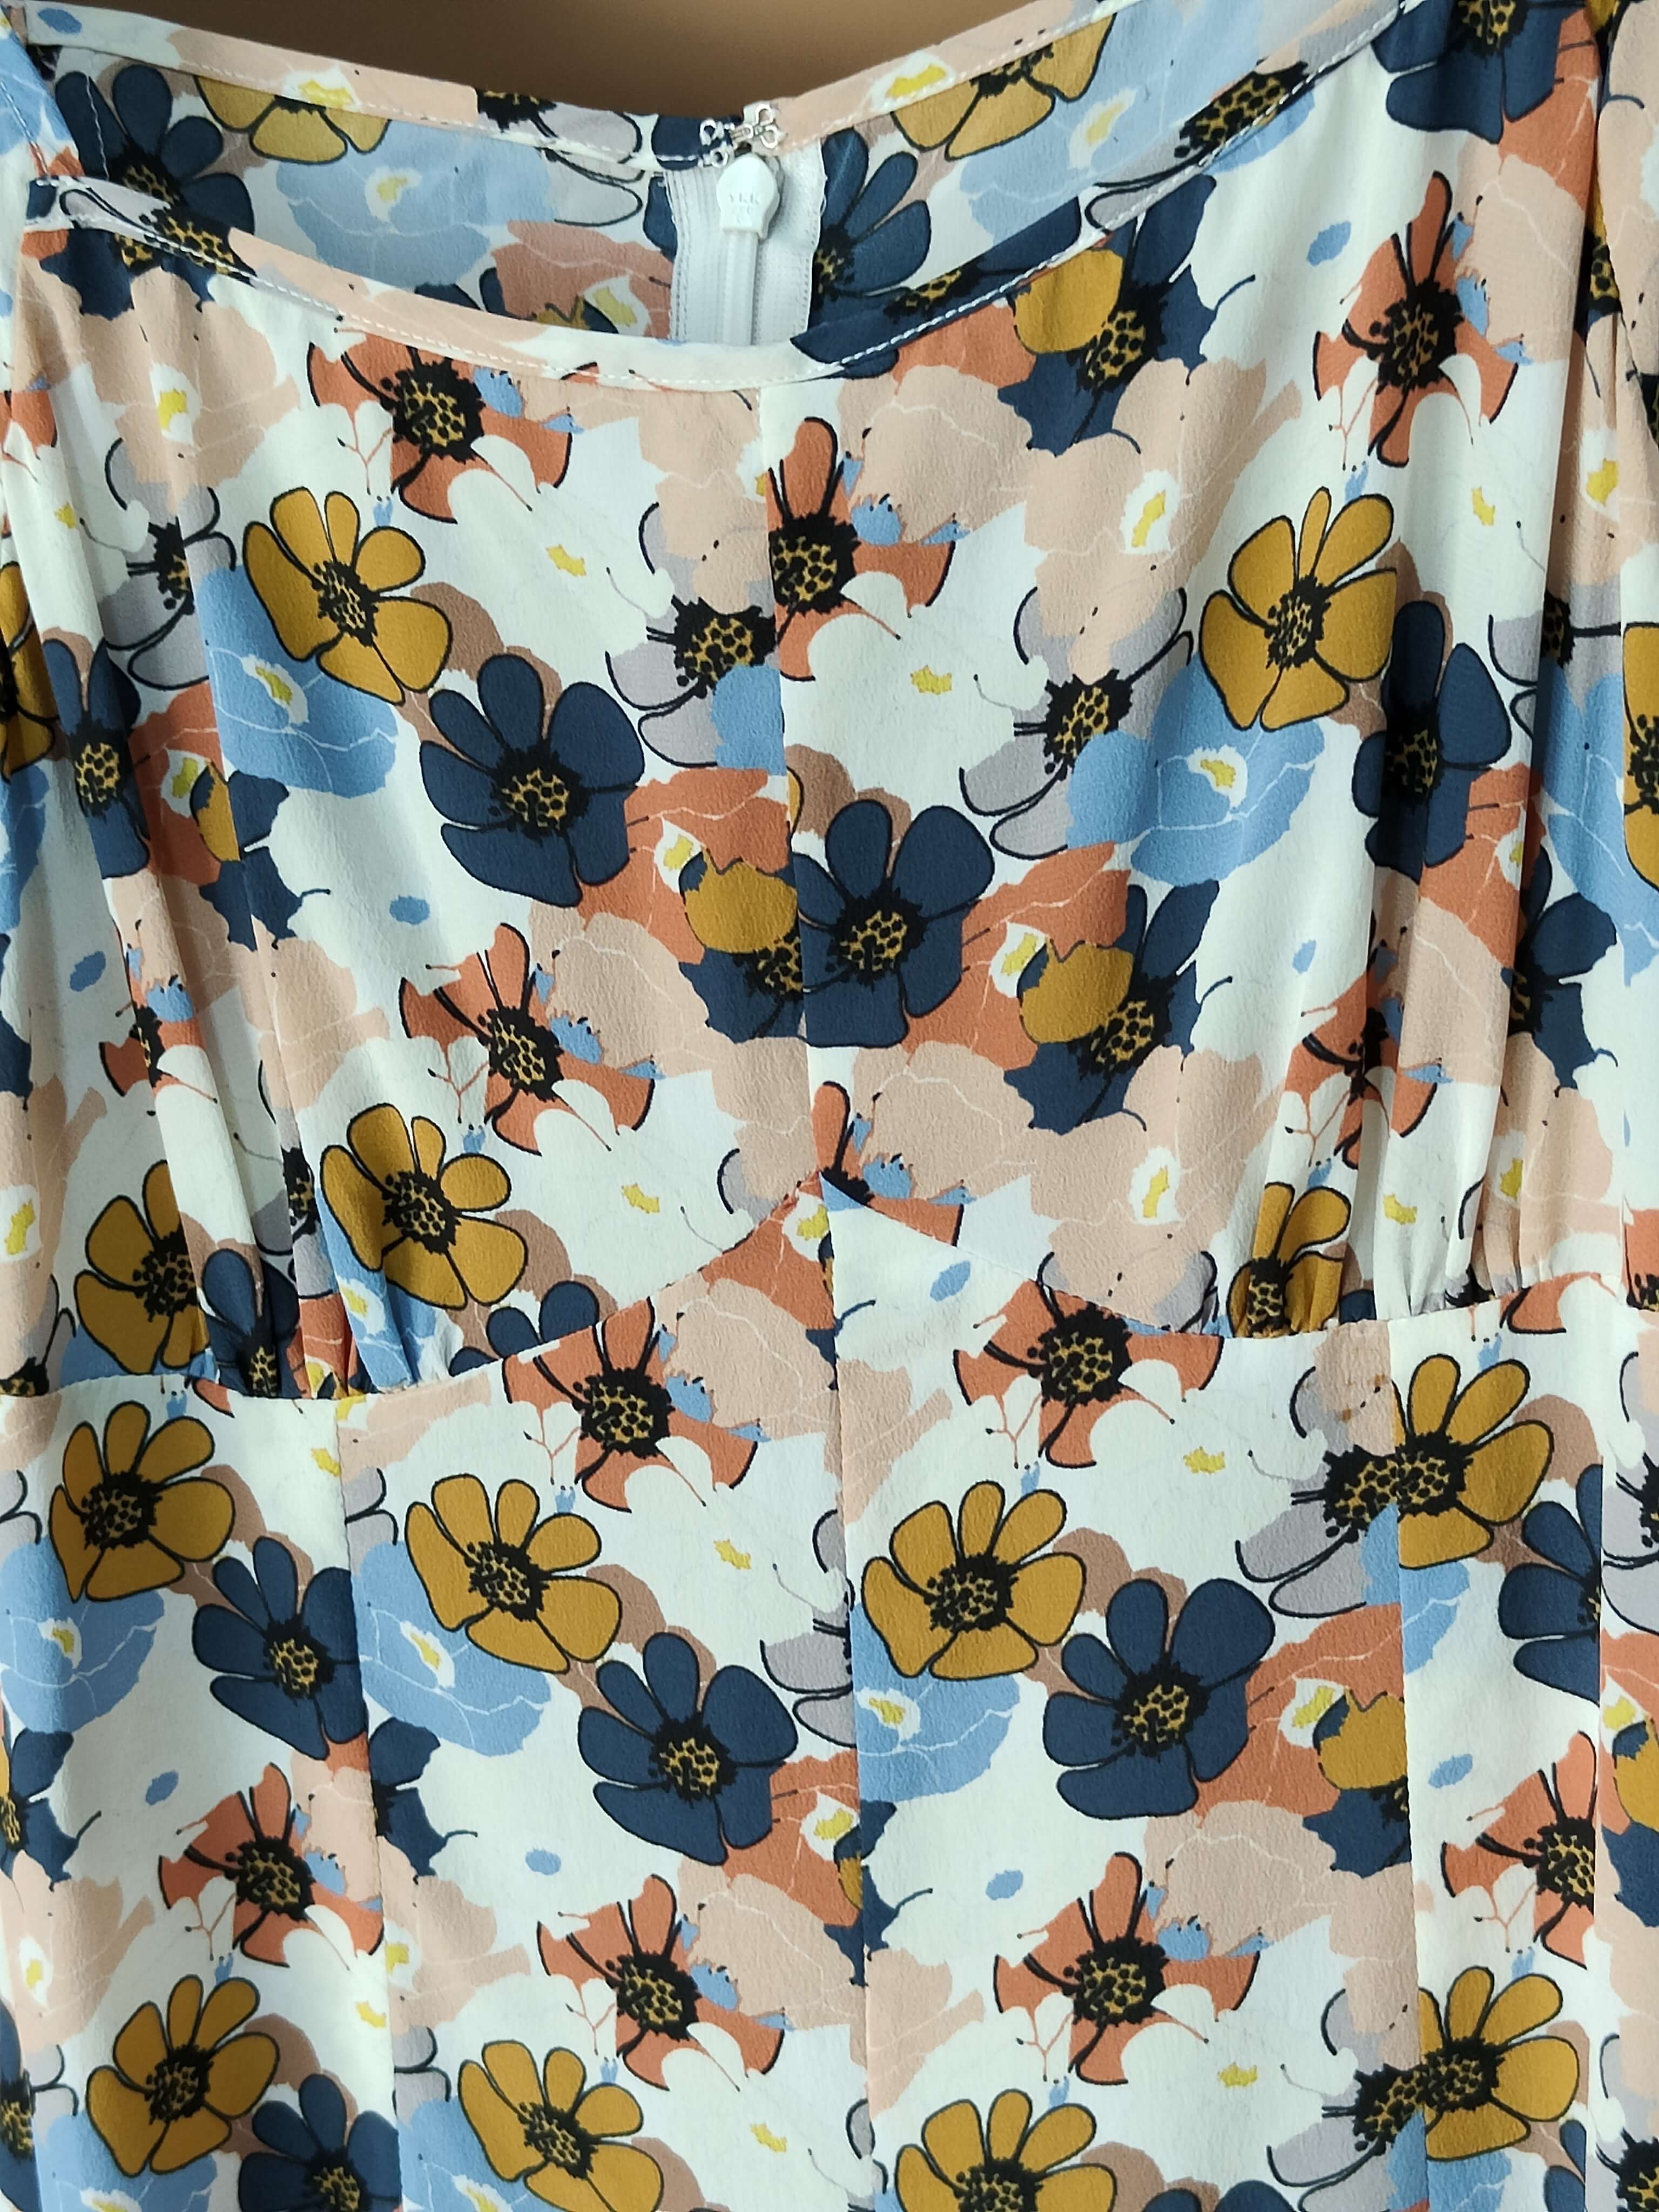 Custom Pritning Floral Short Silk Maxi Dress for Ladies in Bulk